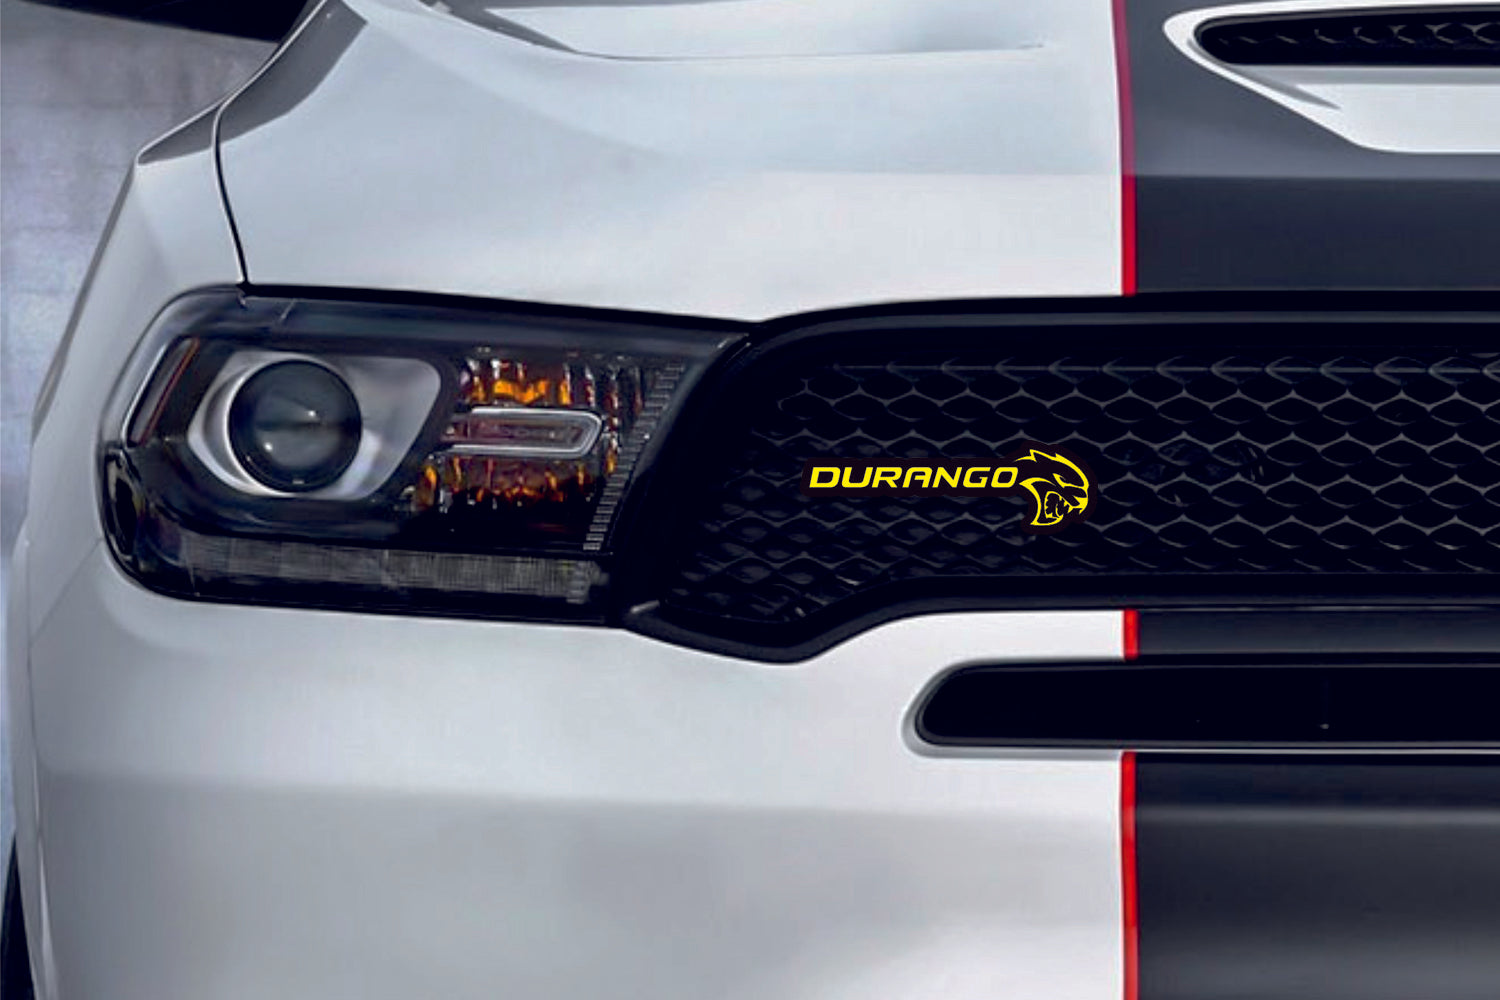 DODGE Radiator grille emblem with Durango + Hellcat logo